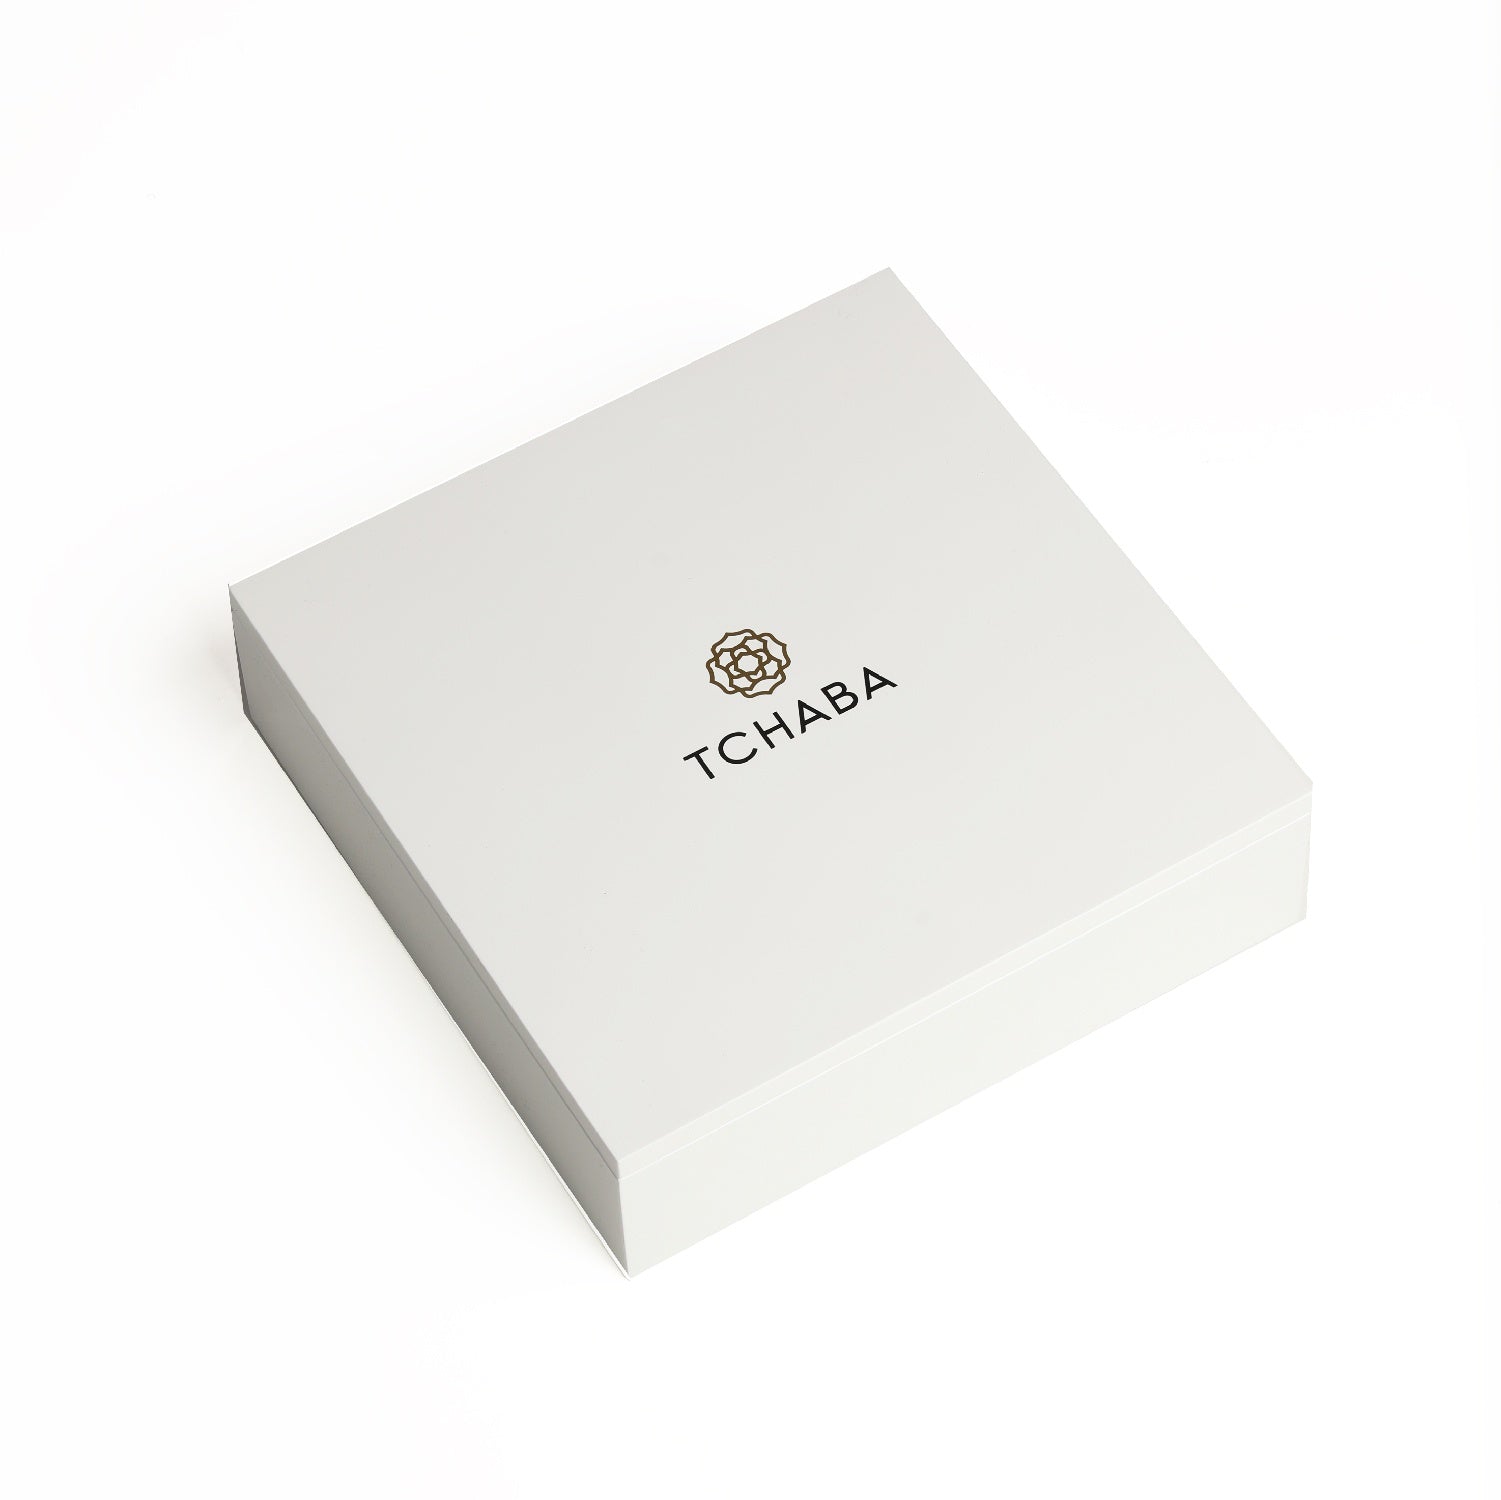 TCHABA Luxury Tea Box White